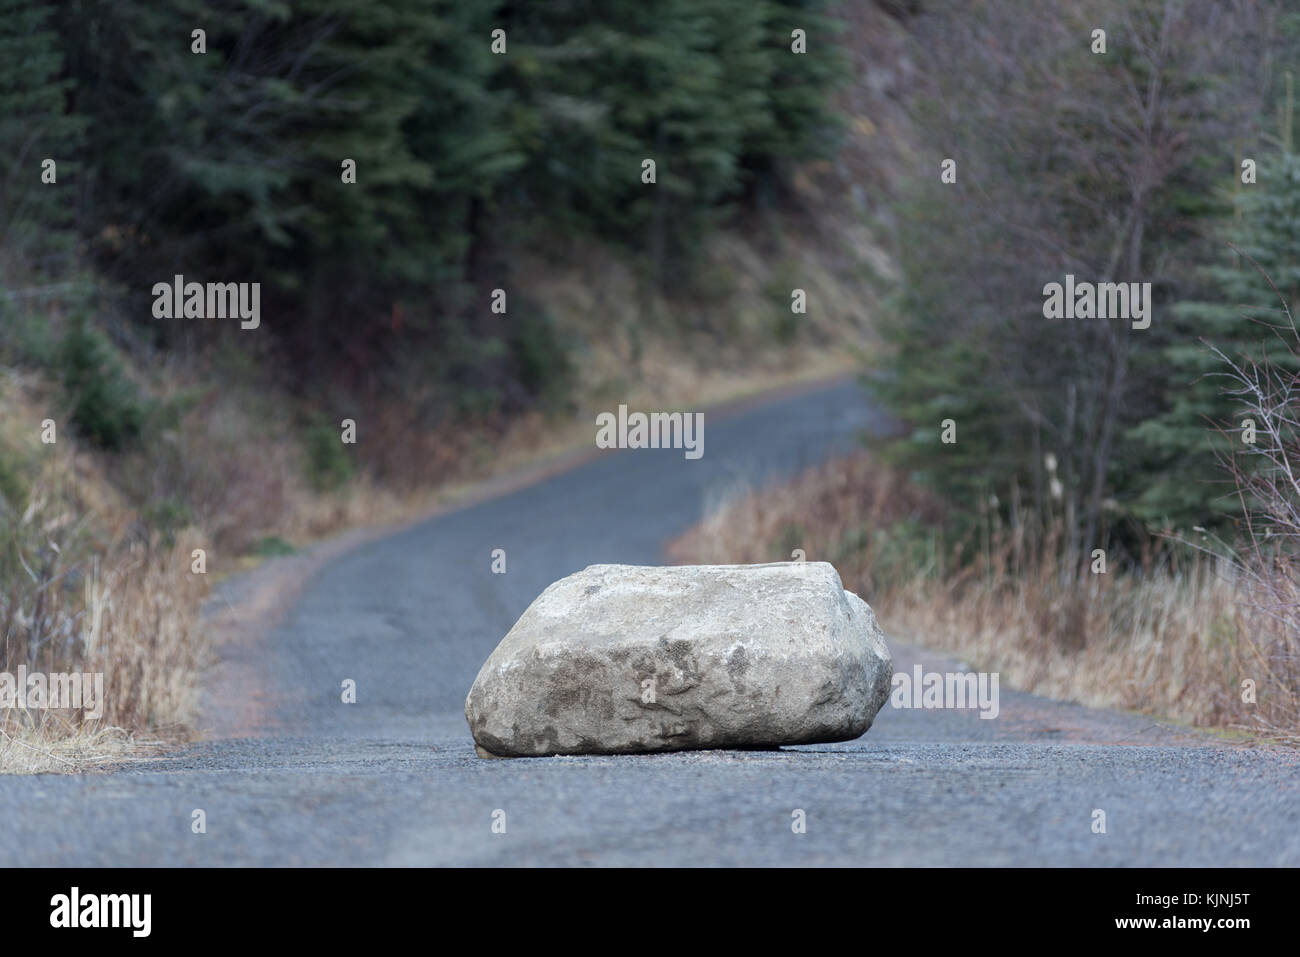 Fallen boulder on a road in Wallowa - Whitman National Forest, Oregon. Stock Photo